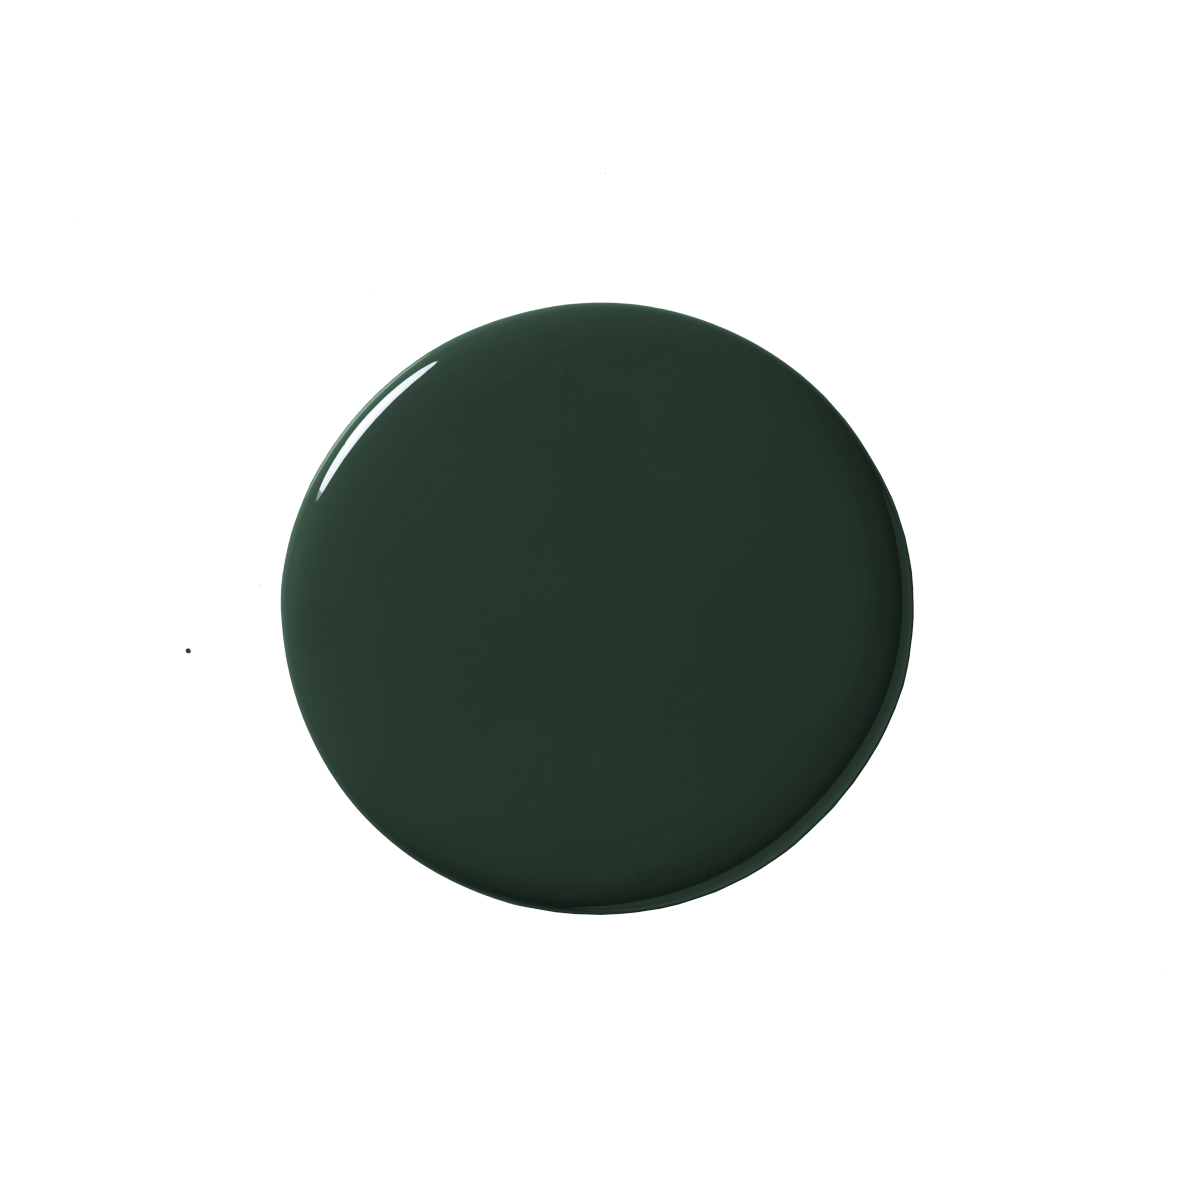 Paint Blob of Essex Green